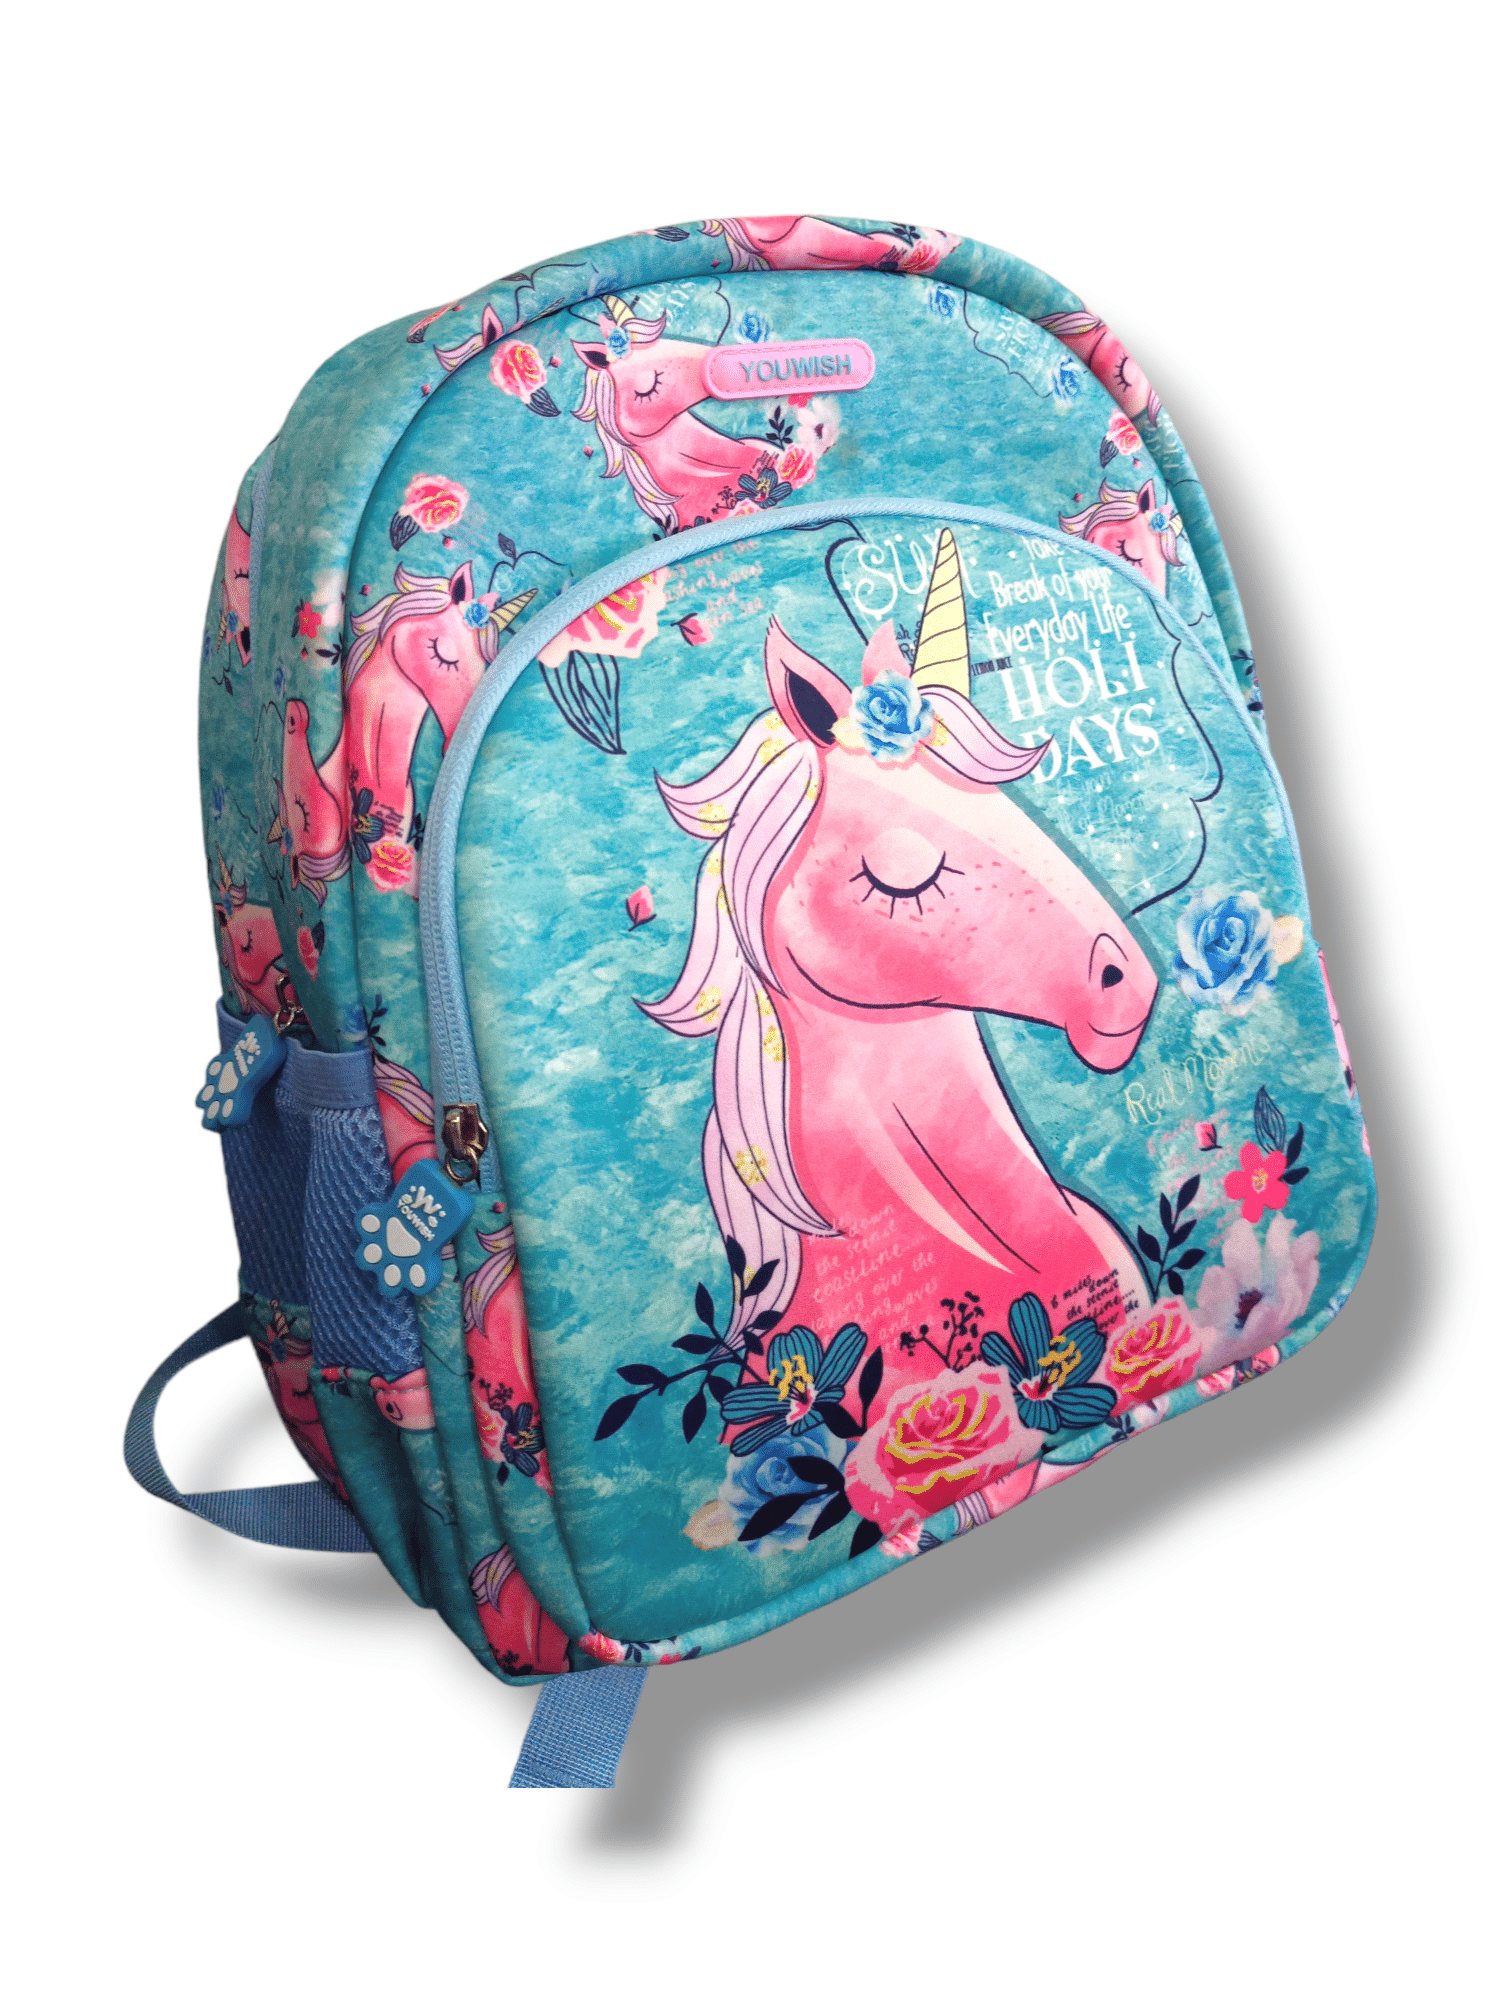 Buy/Send Unicorn School Bag & Glitter Holographic Pouch Online- FNP